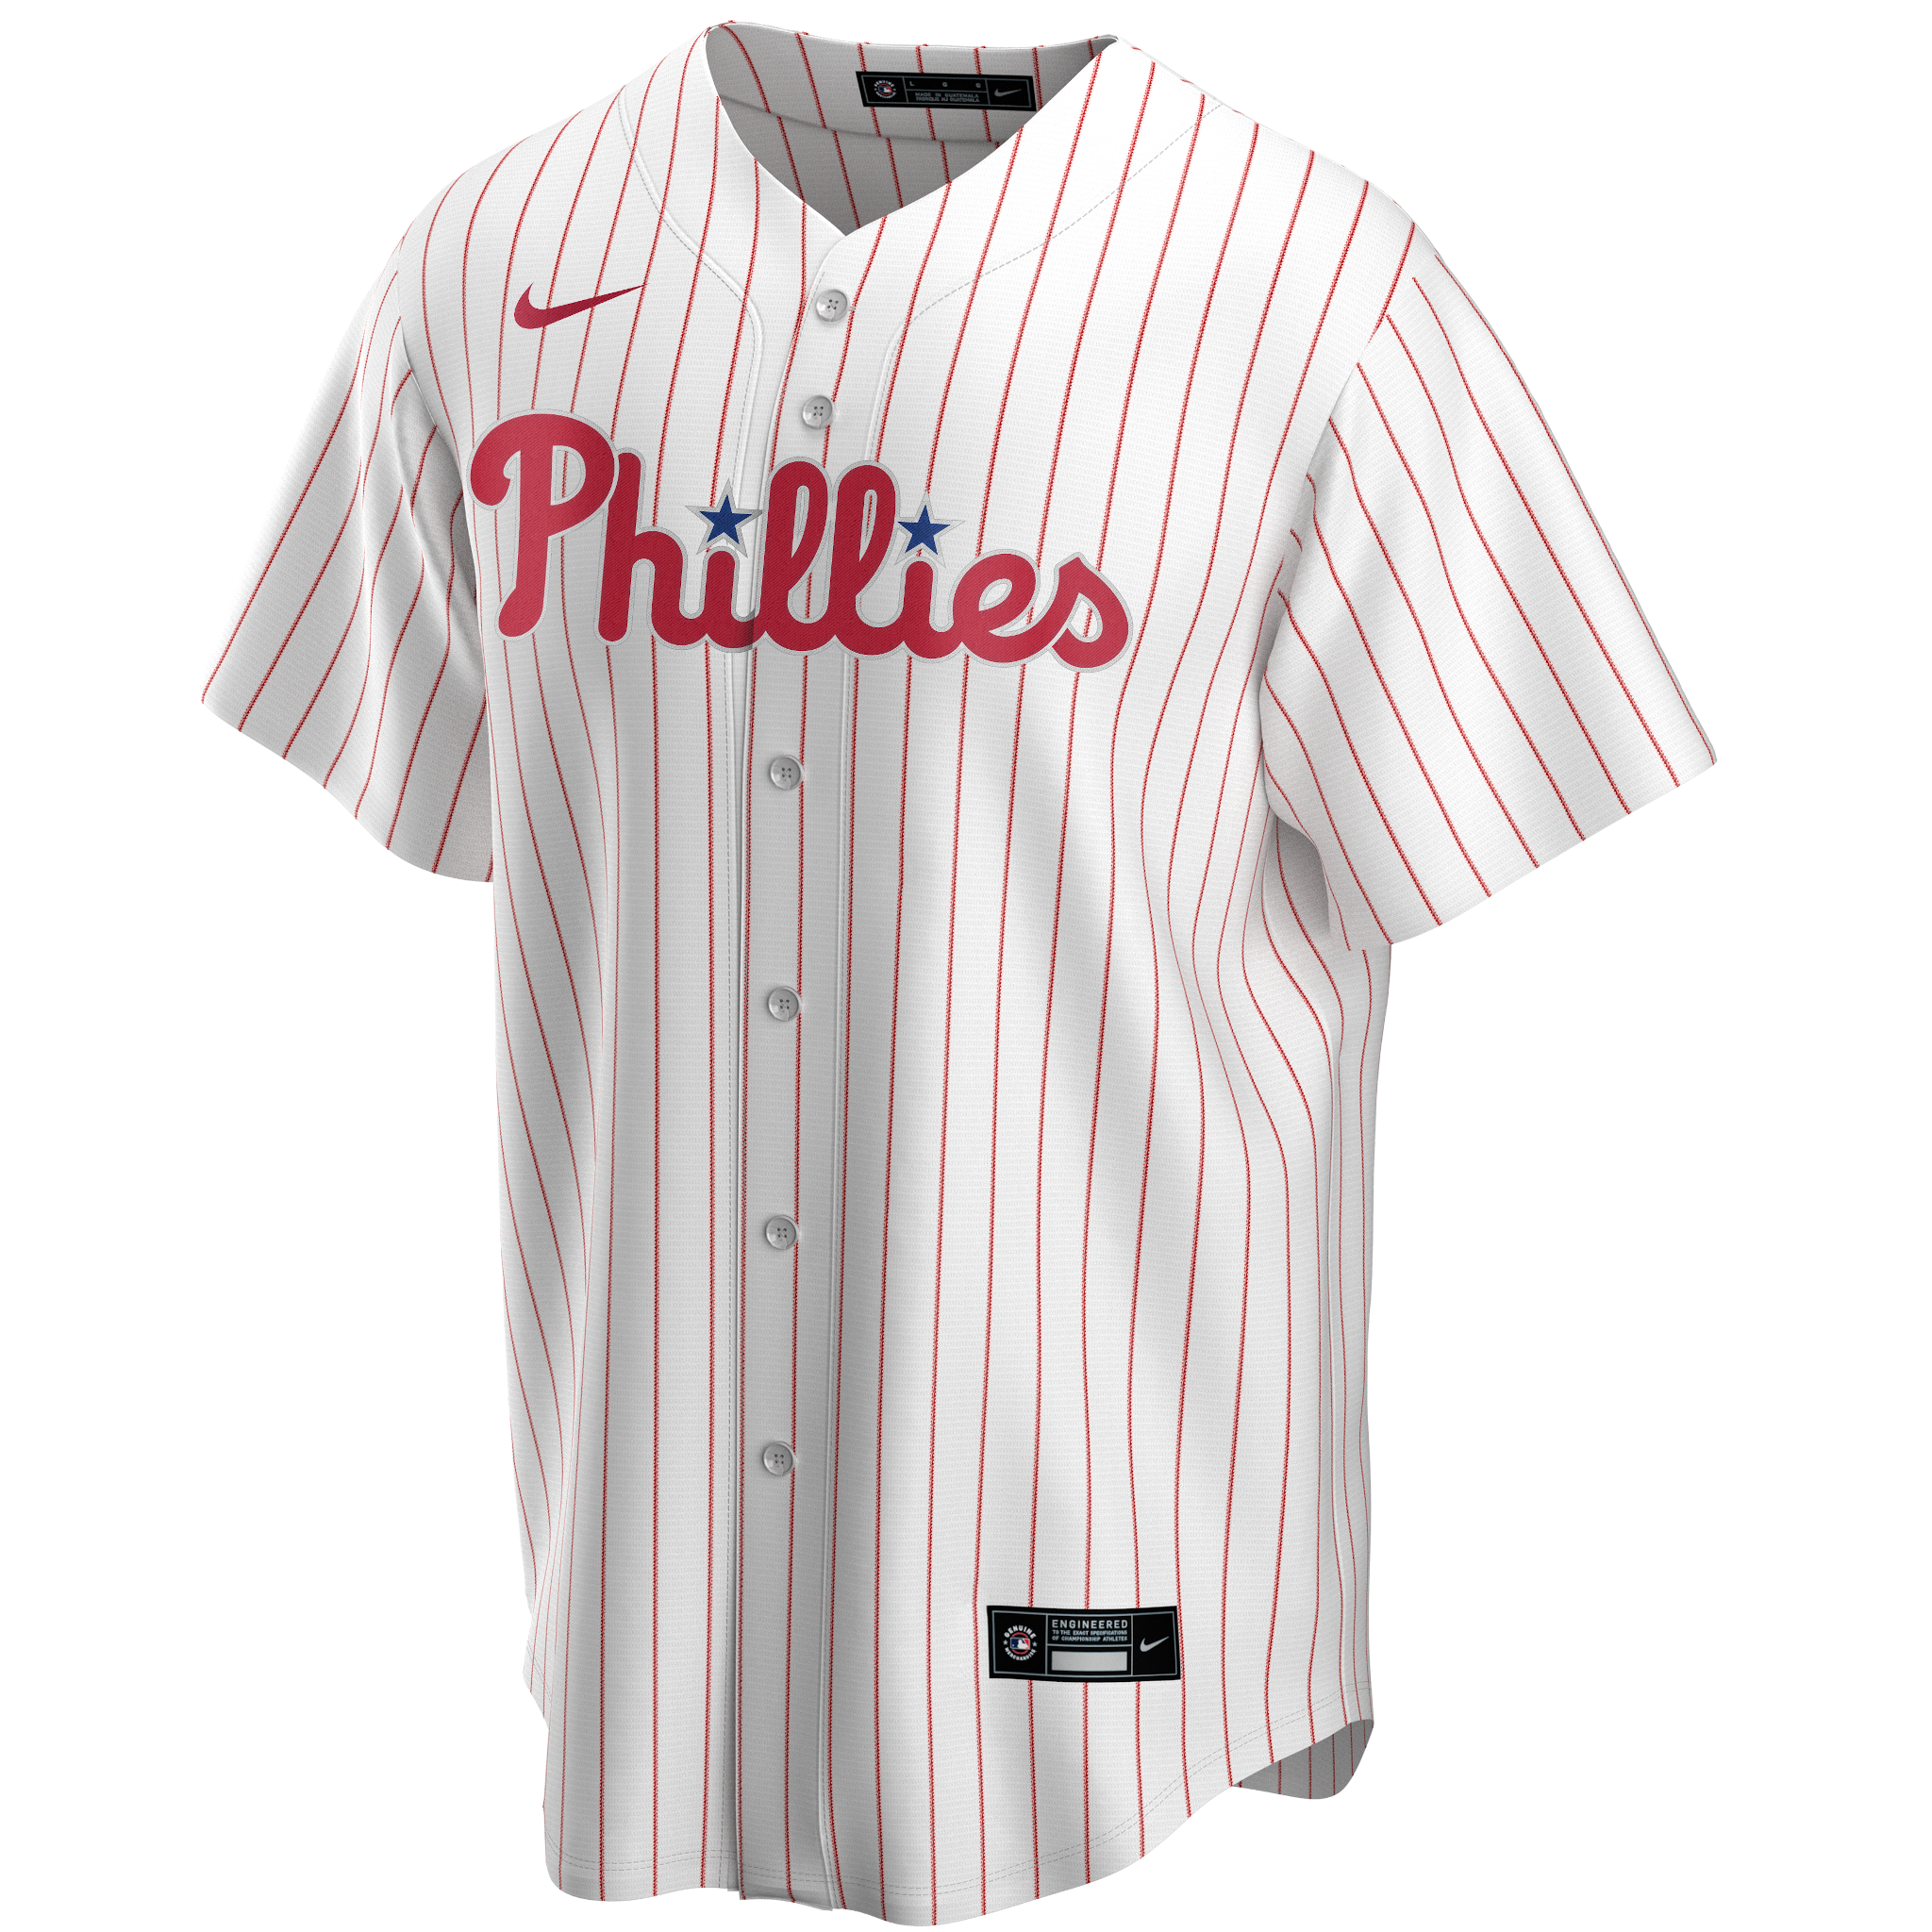 J.T. Realmuto Kids T-Shirt - Tri Ash - Philadelphia | 500 Level Major League Baseball Players Association (MLBPA)